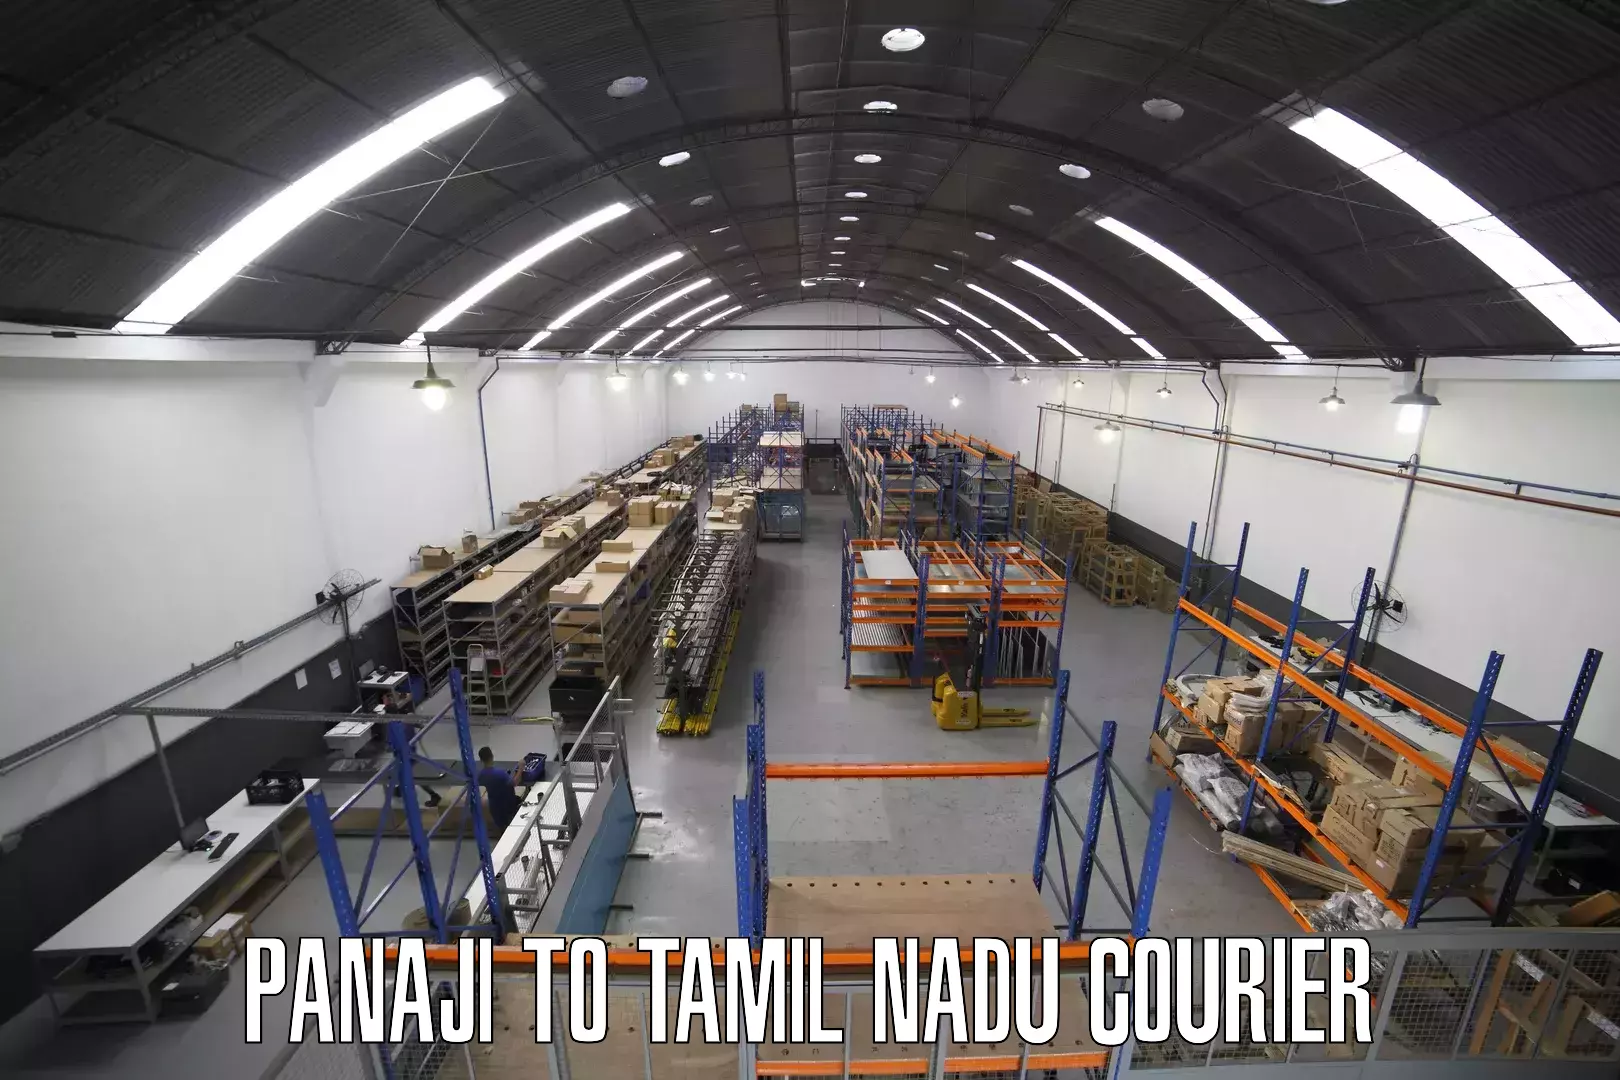 Courier app Panaji to Tamil Nadu